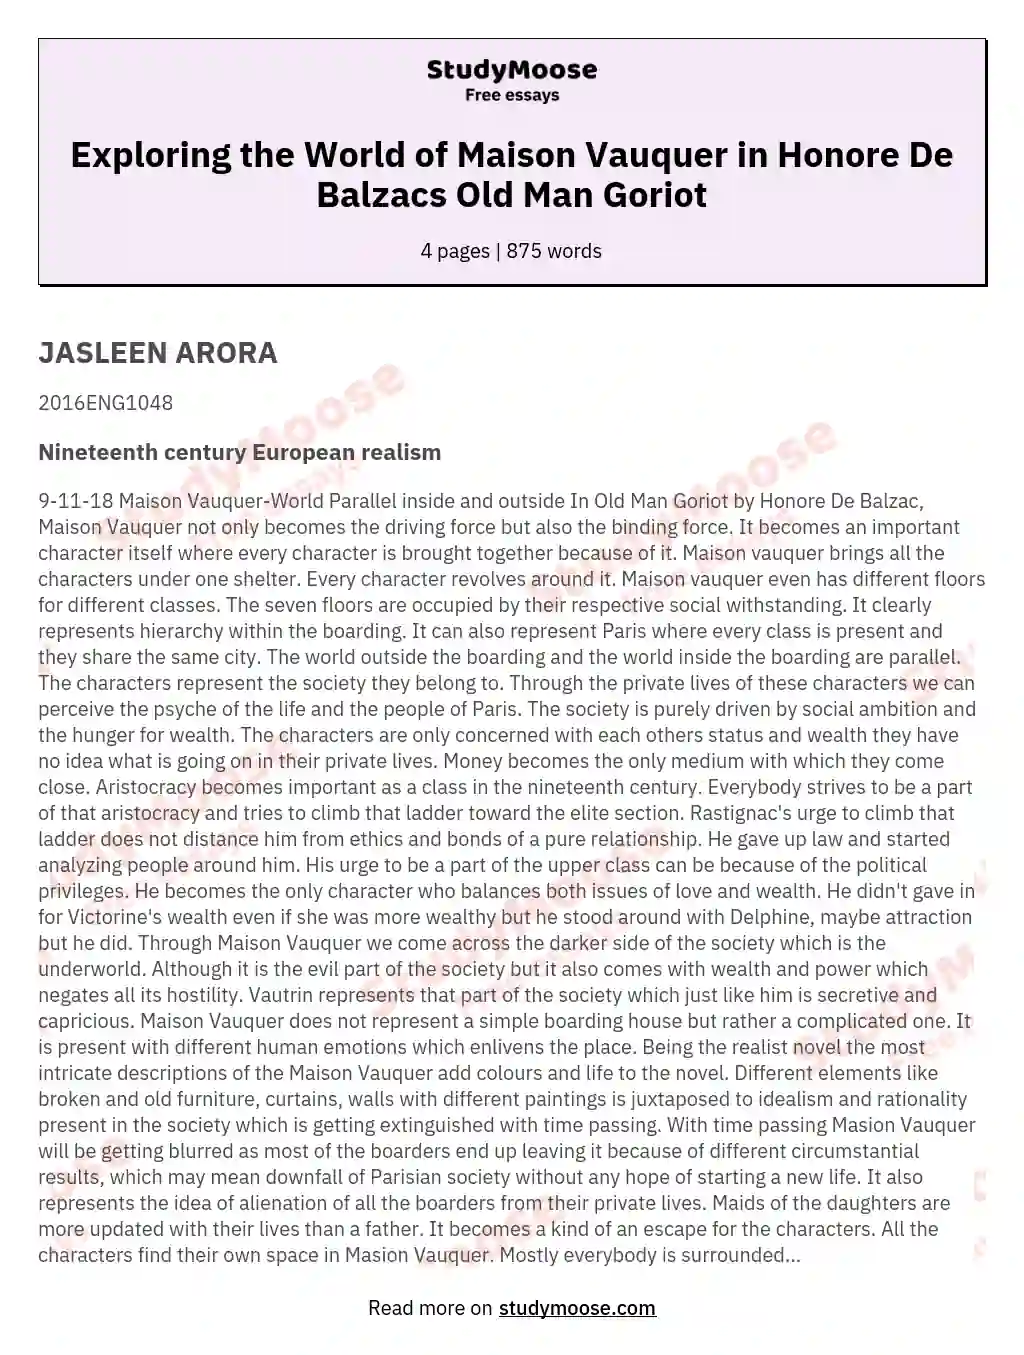 Exploring the World of Maison Vauquer in Honore De Balzacs Old Man Goriot essay